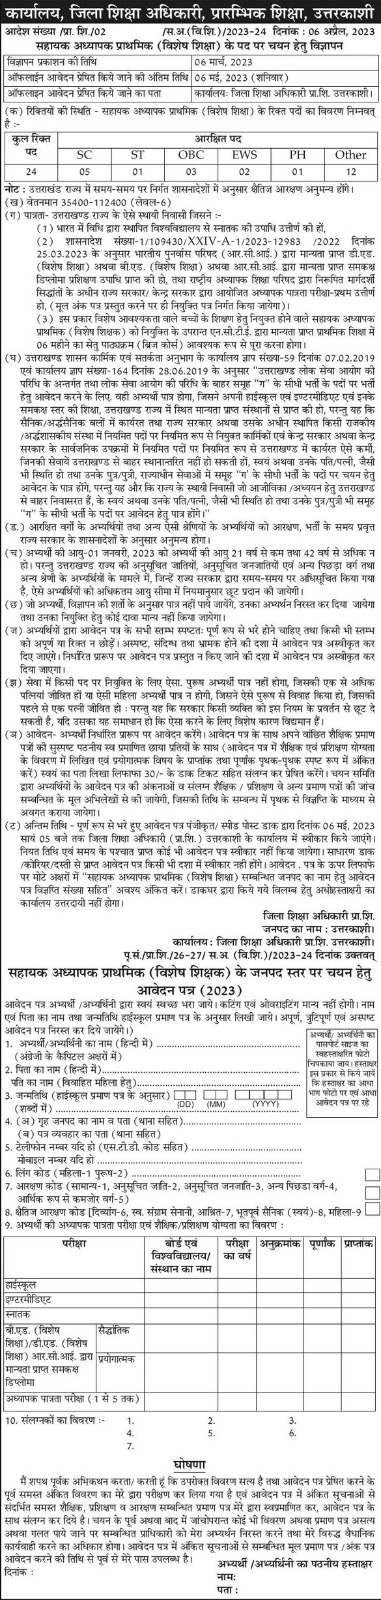 Teacher Recruitment in Uttarkashi